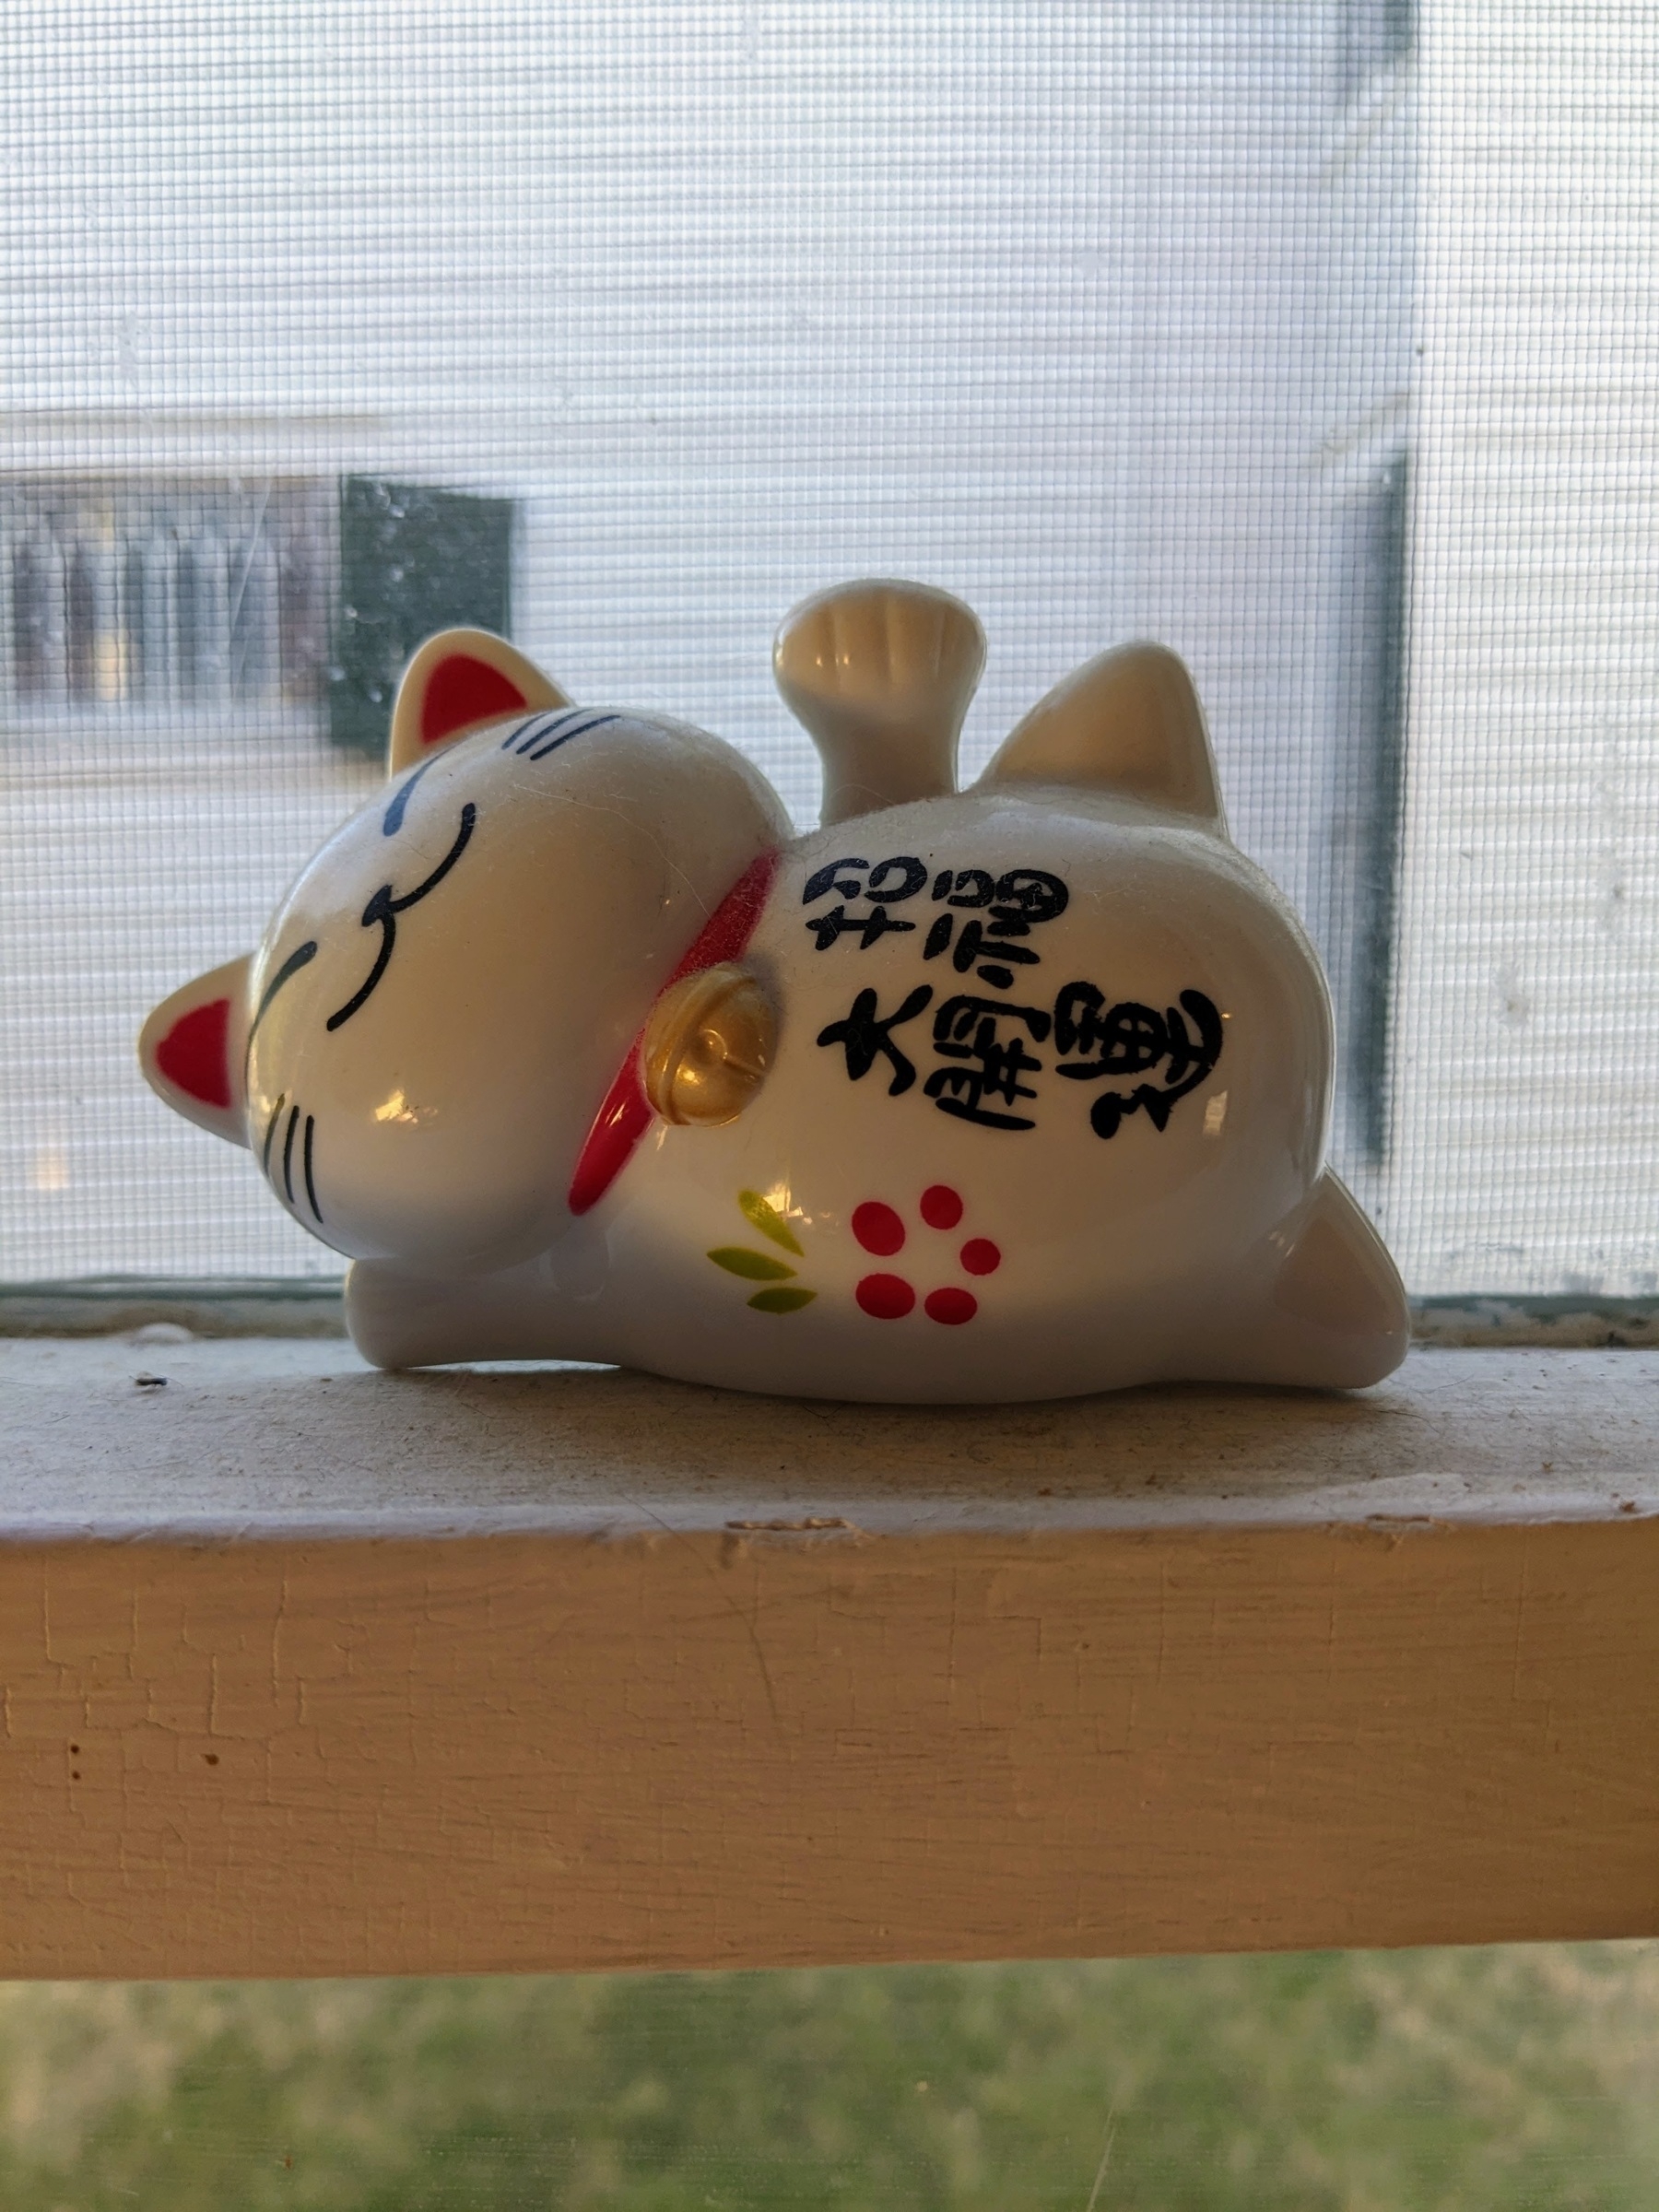 plastic good luck maneki neko figurine on a windowsill